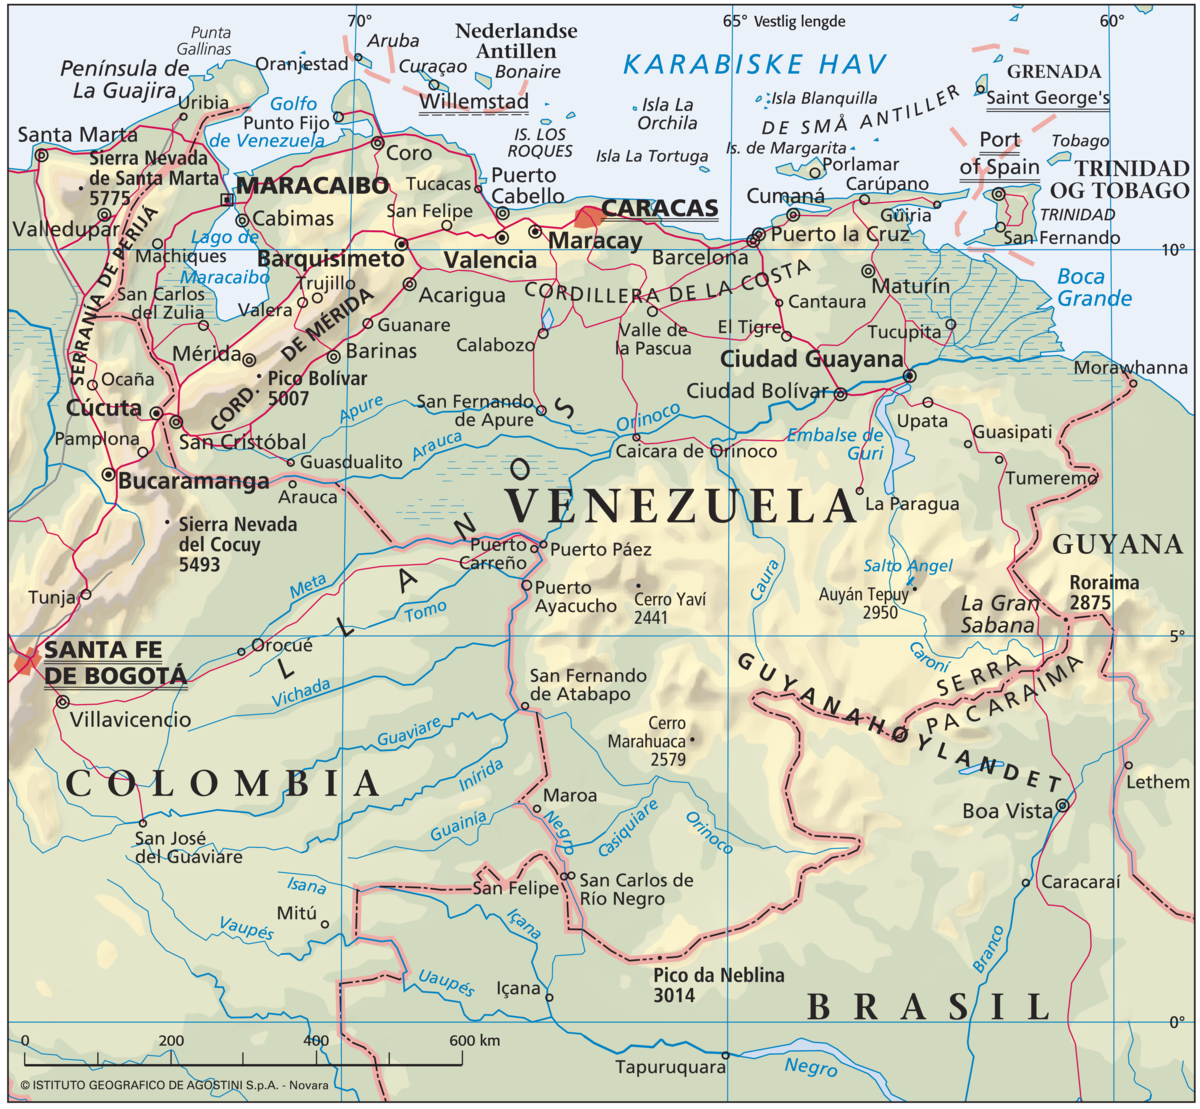 Venezuela (Hovedkart)